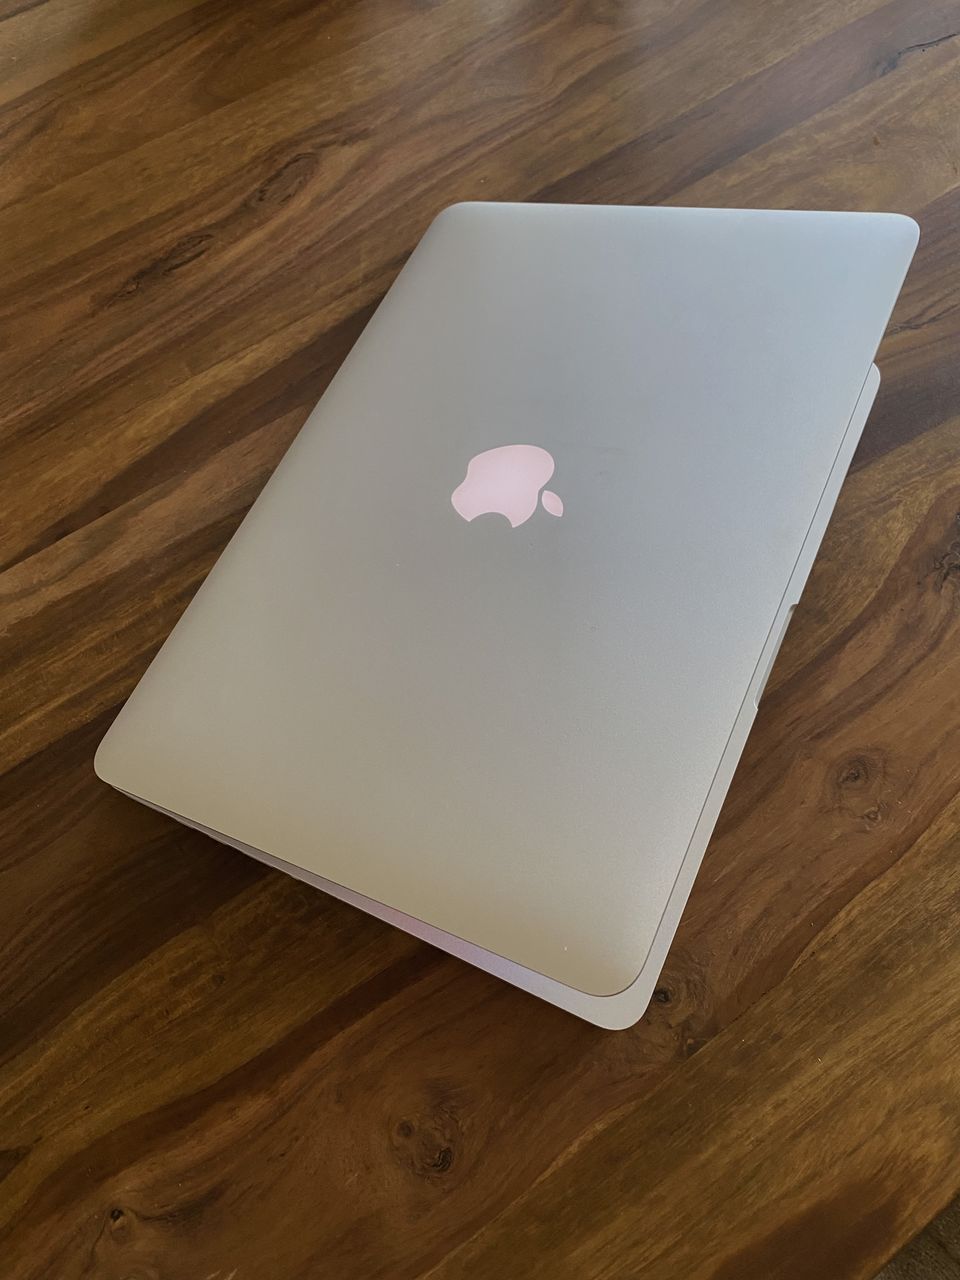 13 inch macbook pro with retina display resolution